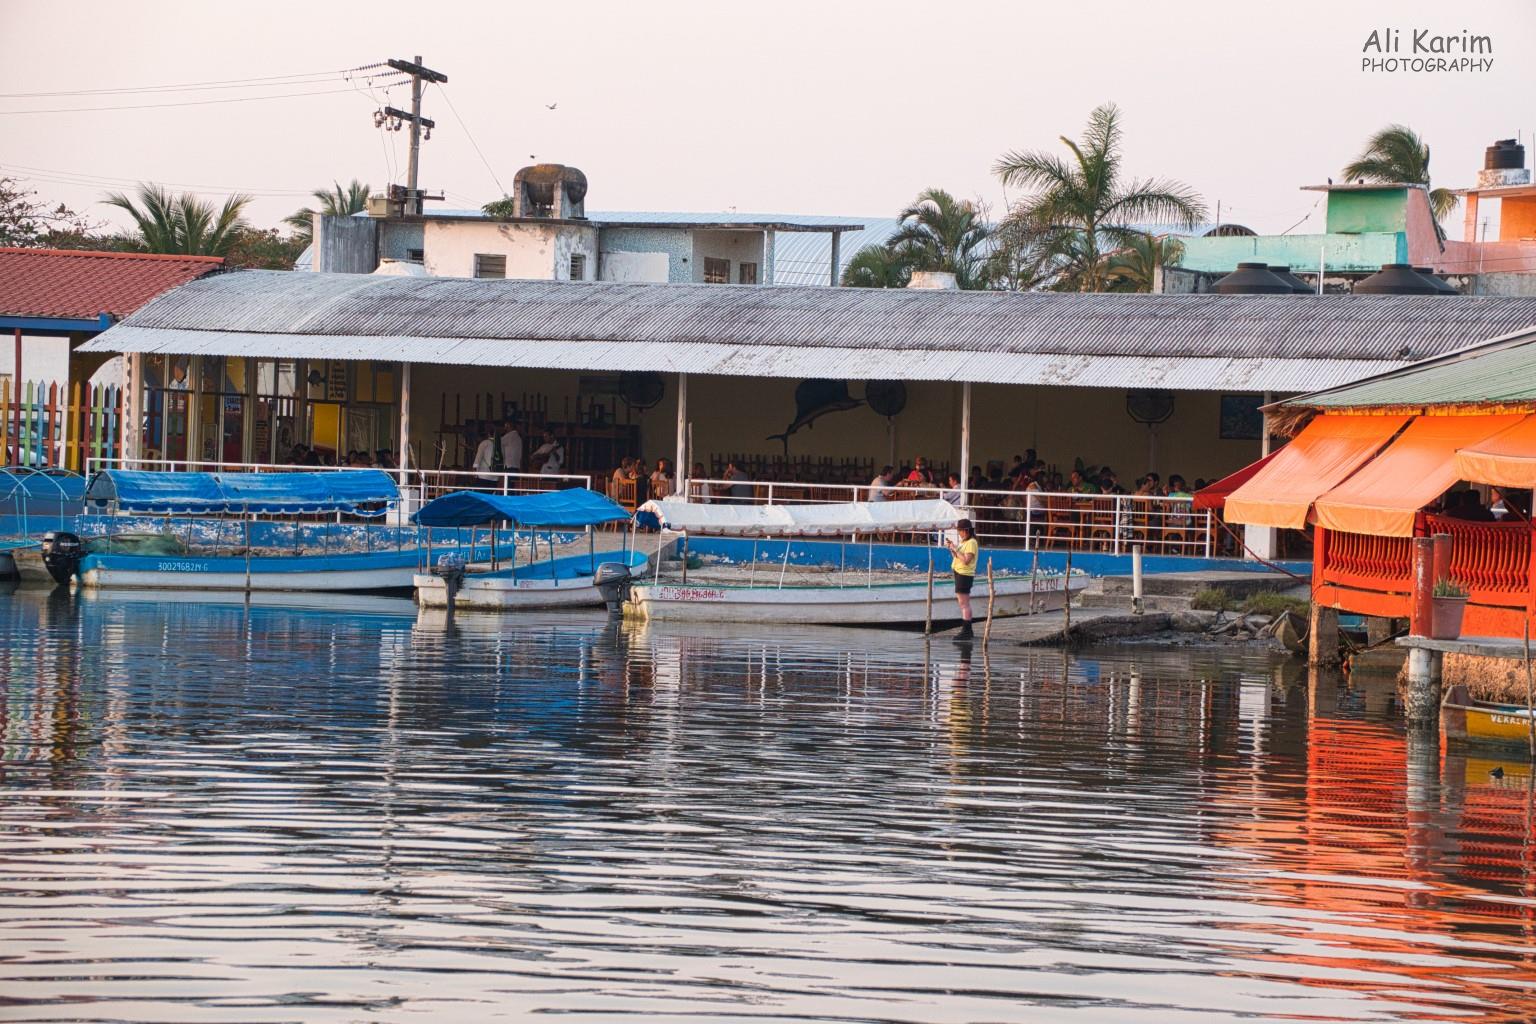 Veracruz, Mexico, December 2020, Many seaside restaurants here on the lagoon